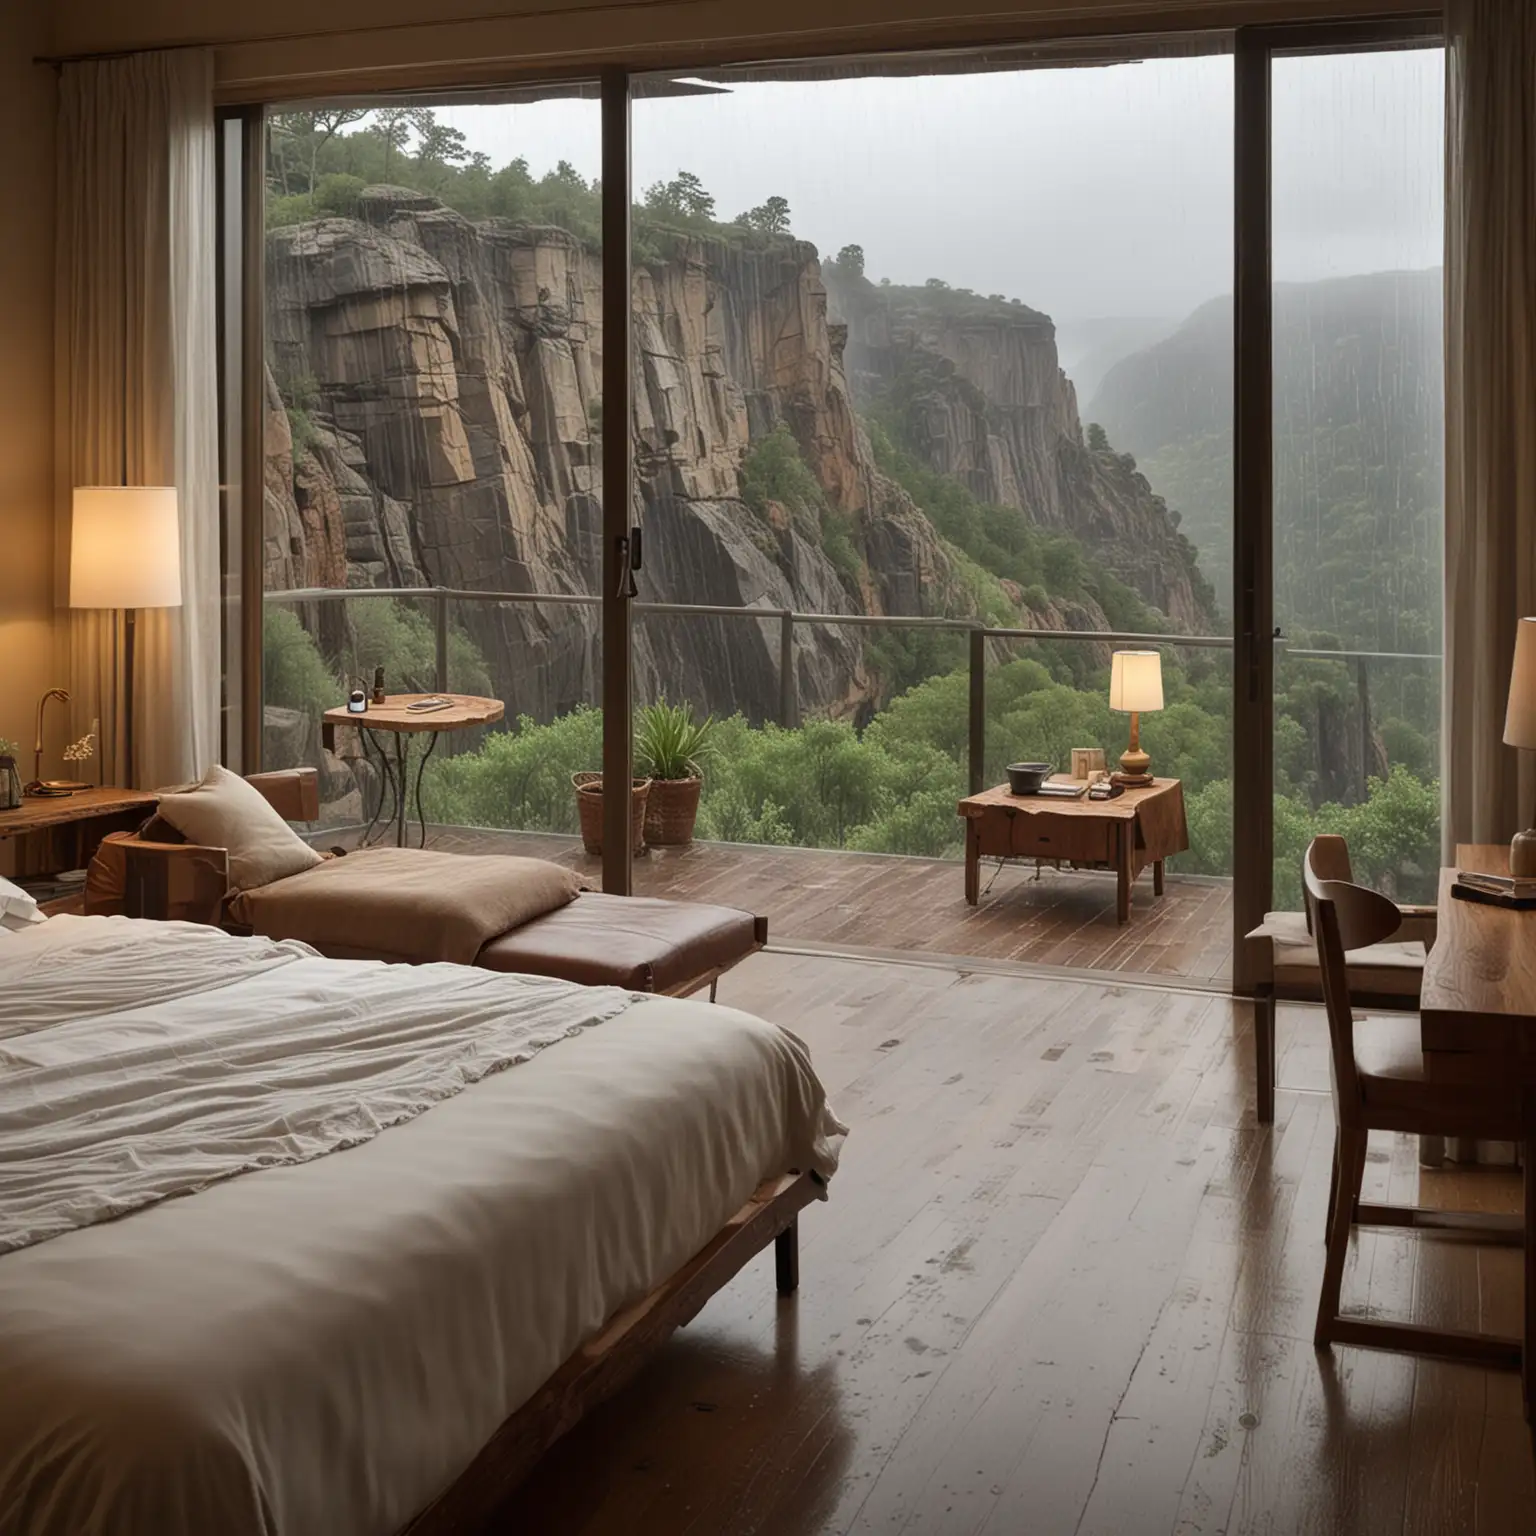 big bed, floor-to-ceiling windows, wood desk, table lamp, rain outside, cliff edge